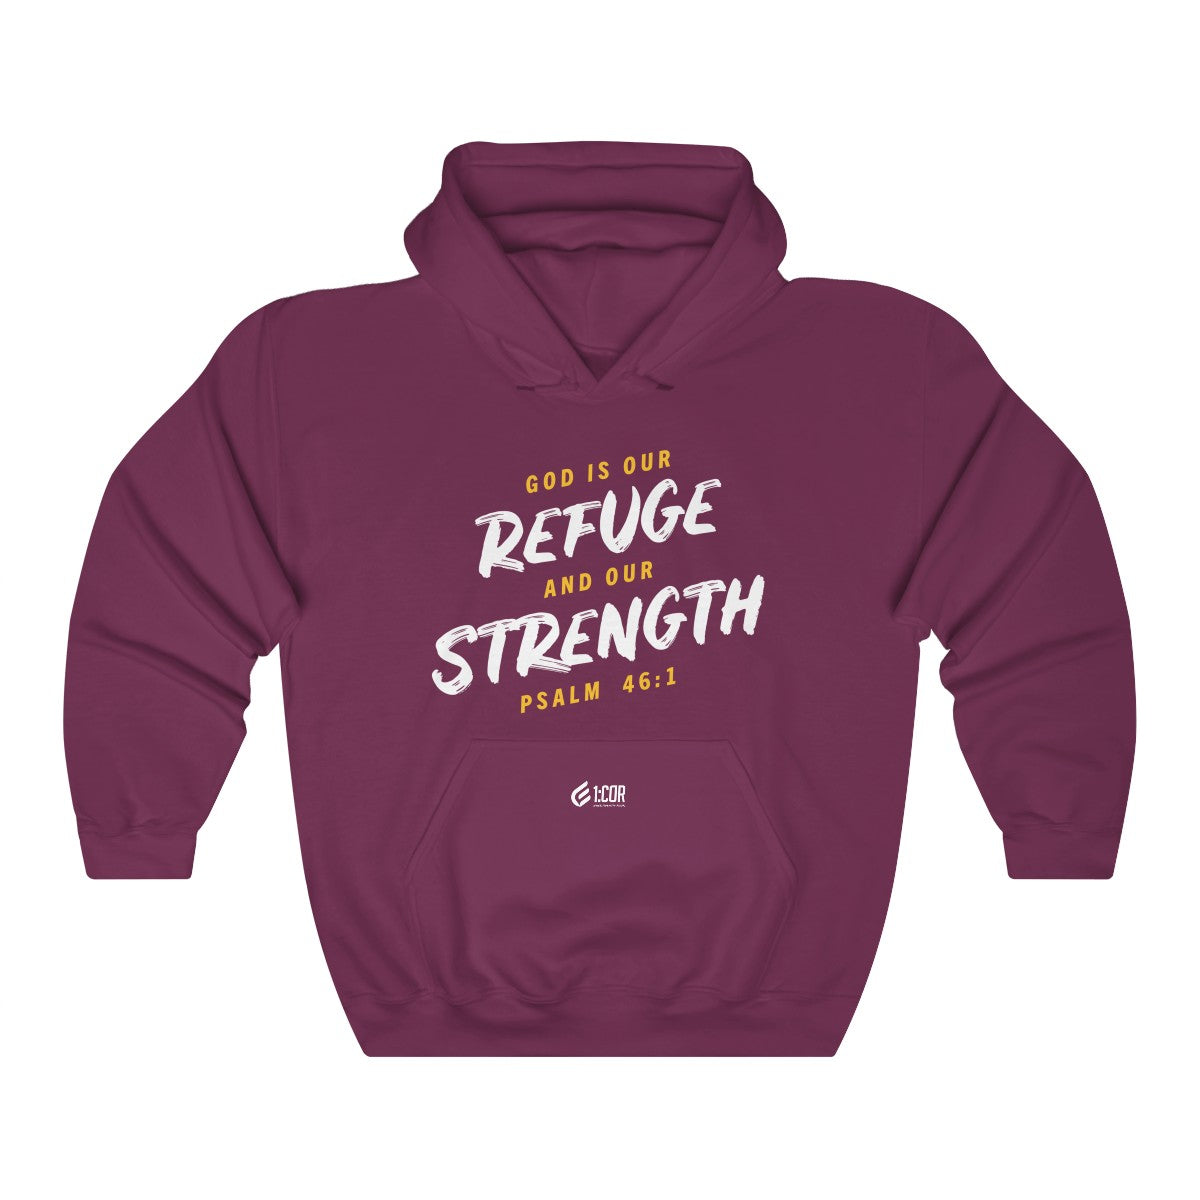 Refuge and Strength | Hooded Sweatshirt